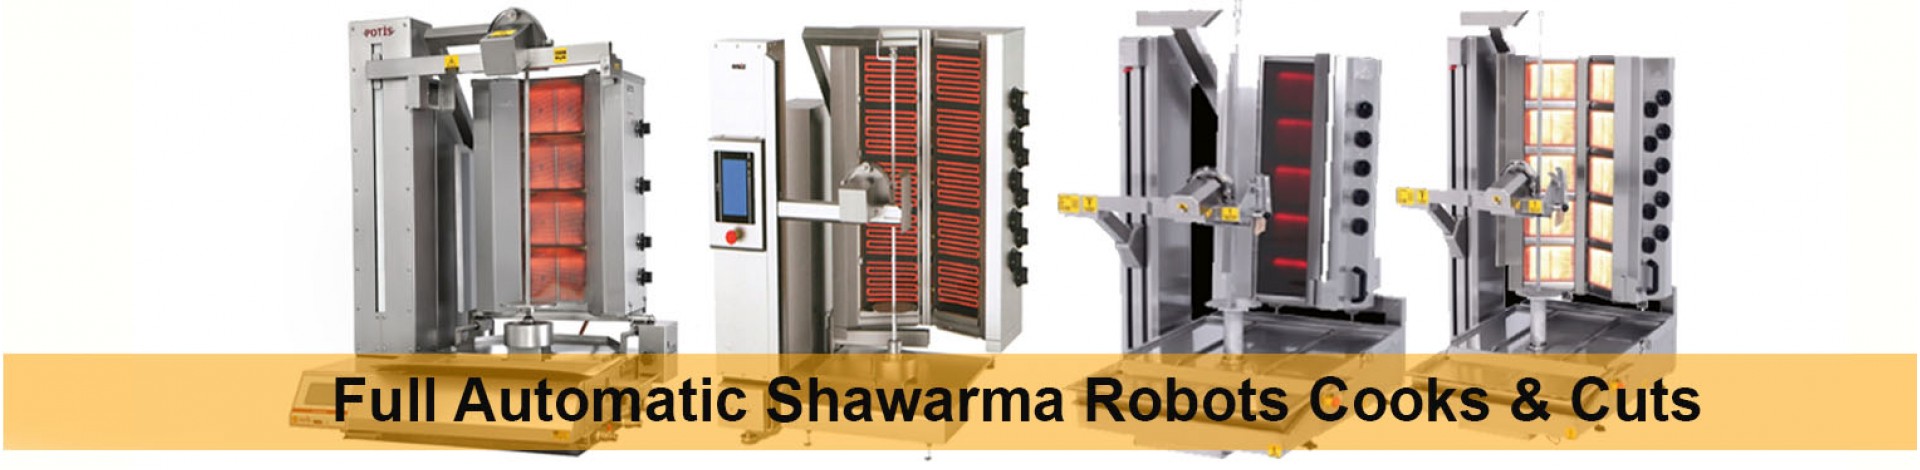 Automatic shawarma robots